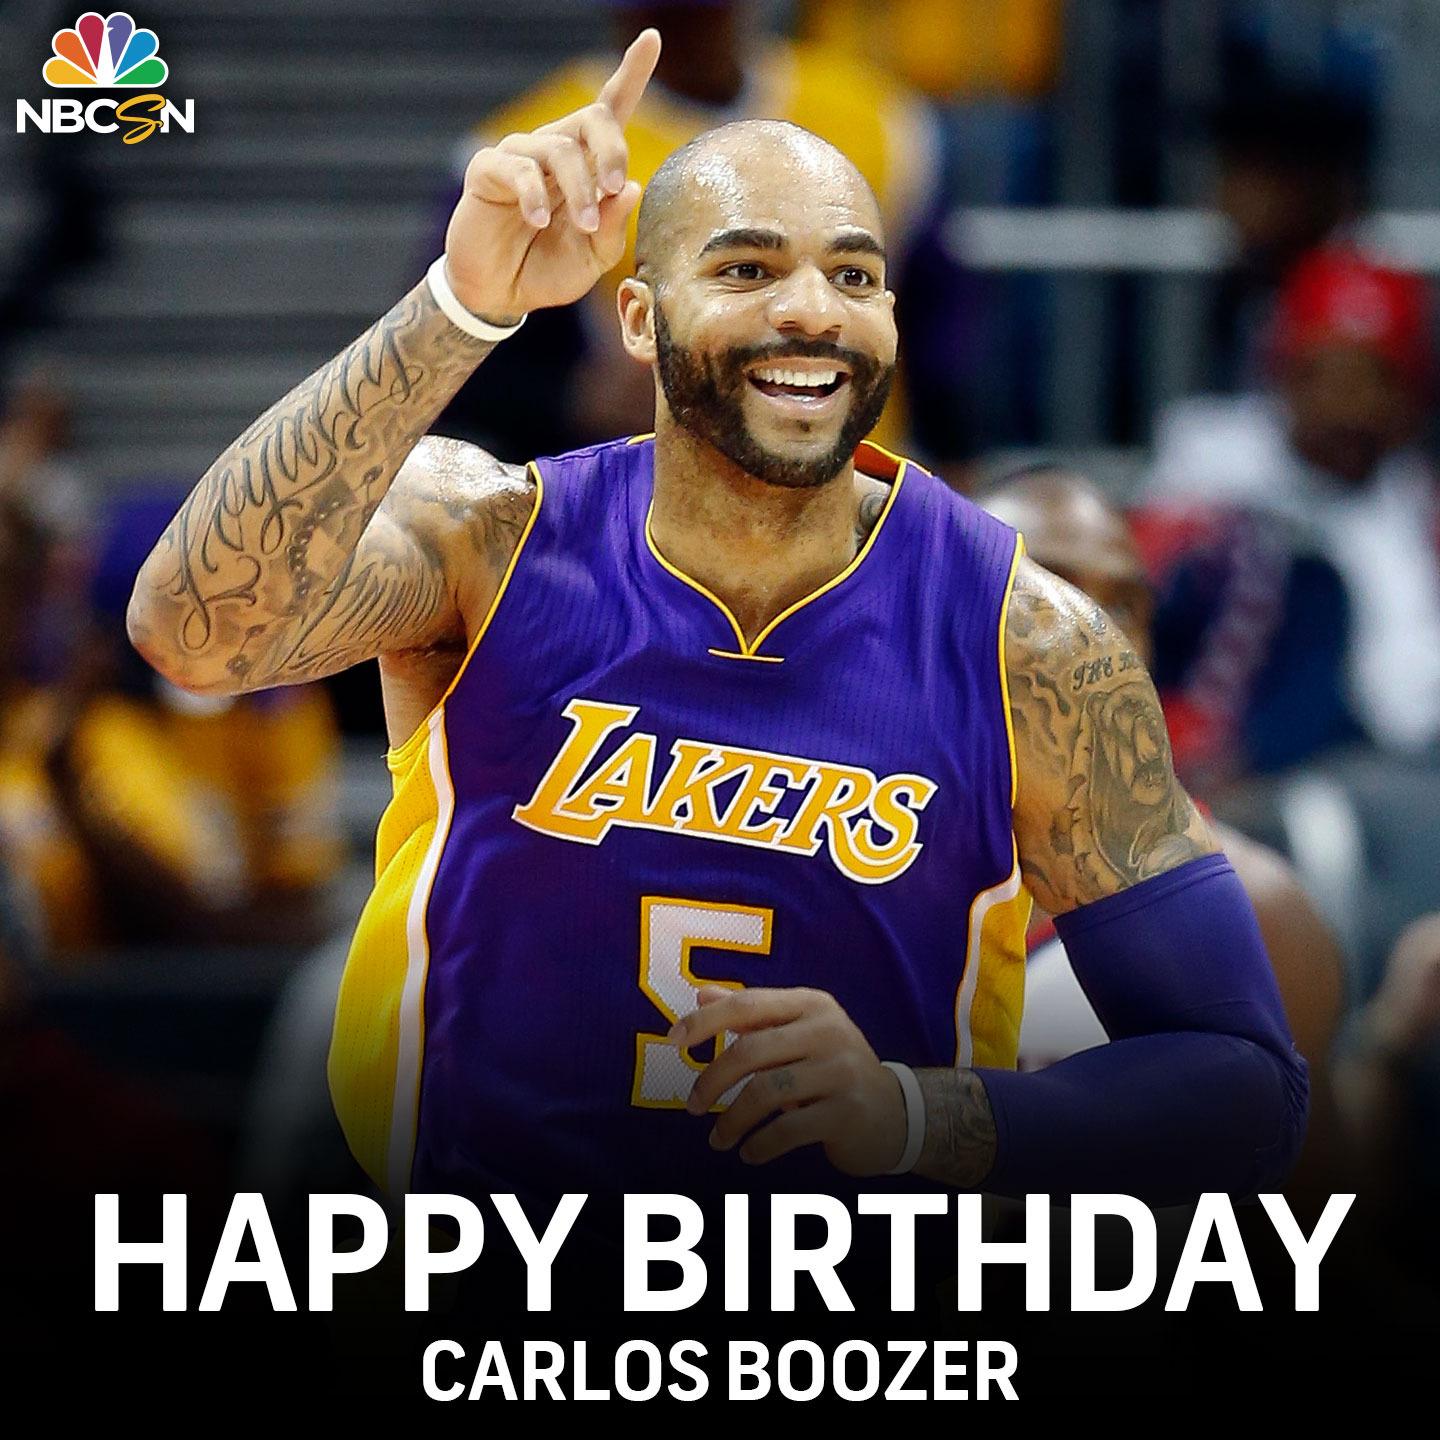 Happy Birthday Carlos Boozer! 